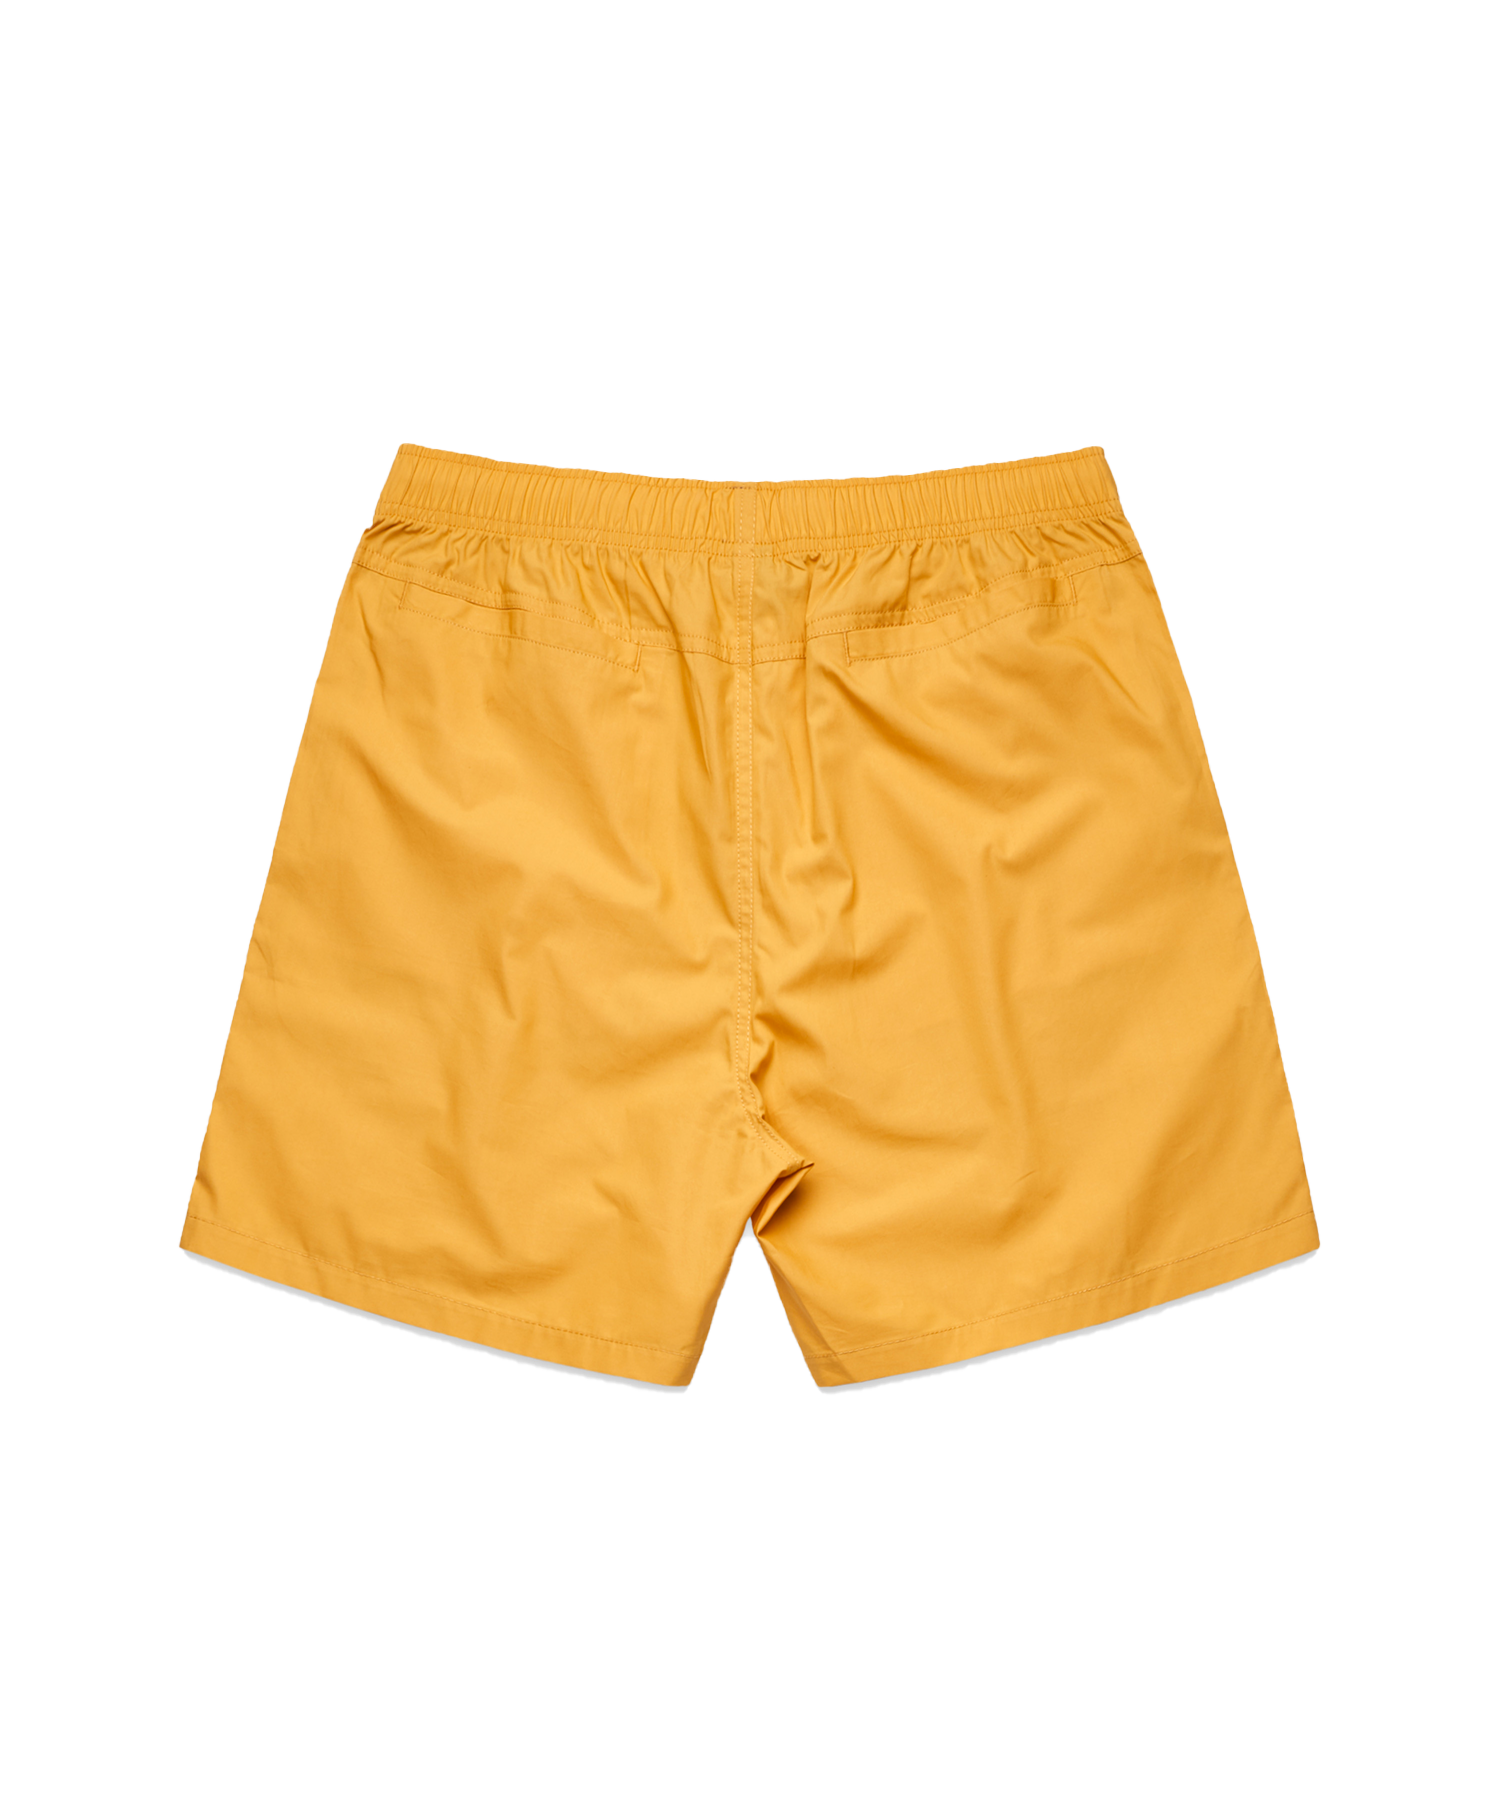 35% Summer Shorts